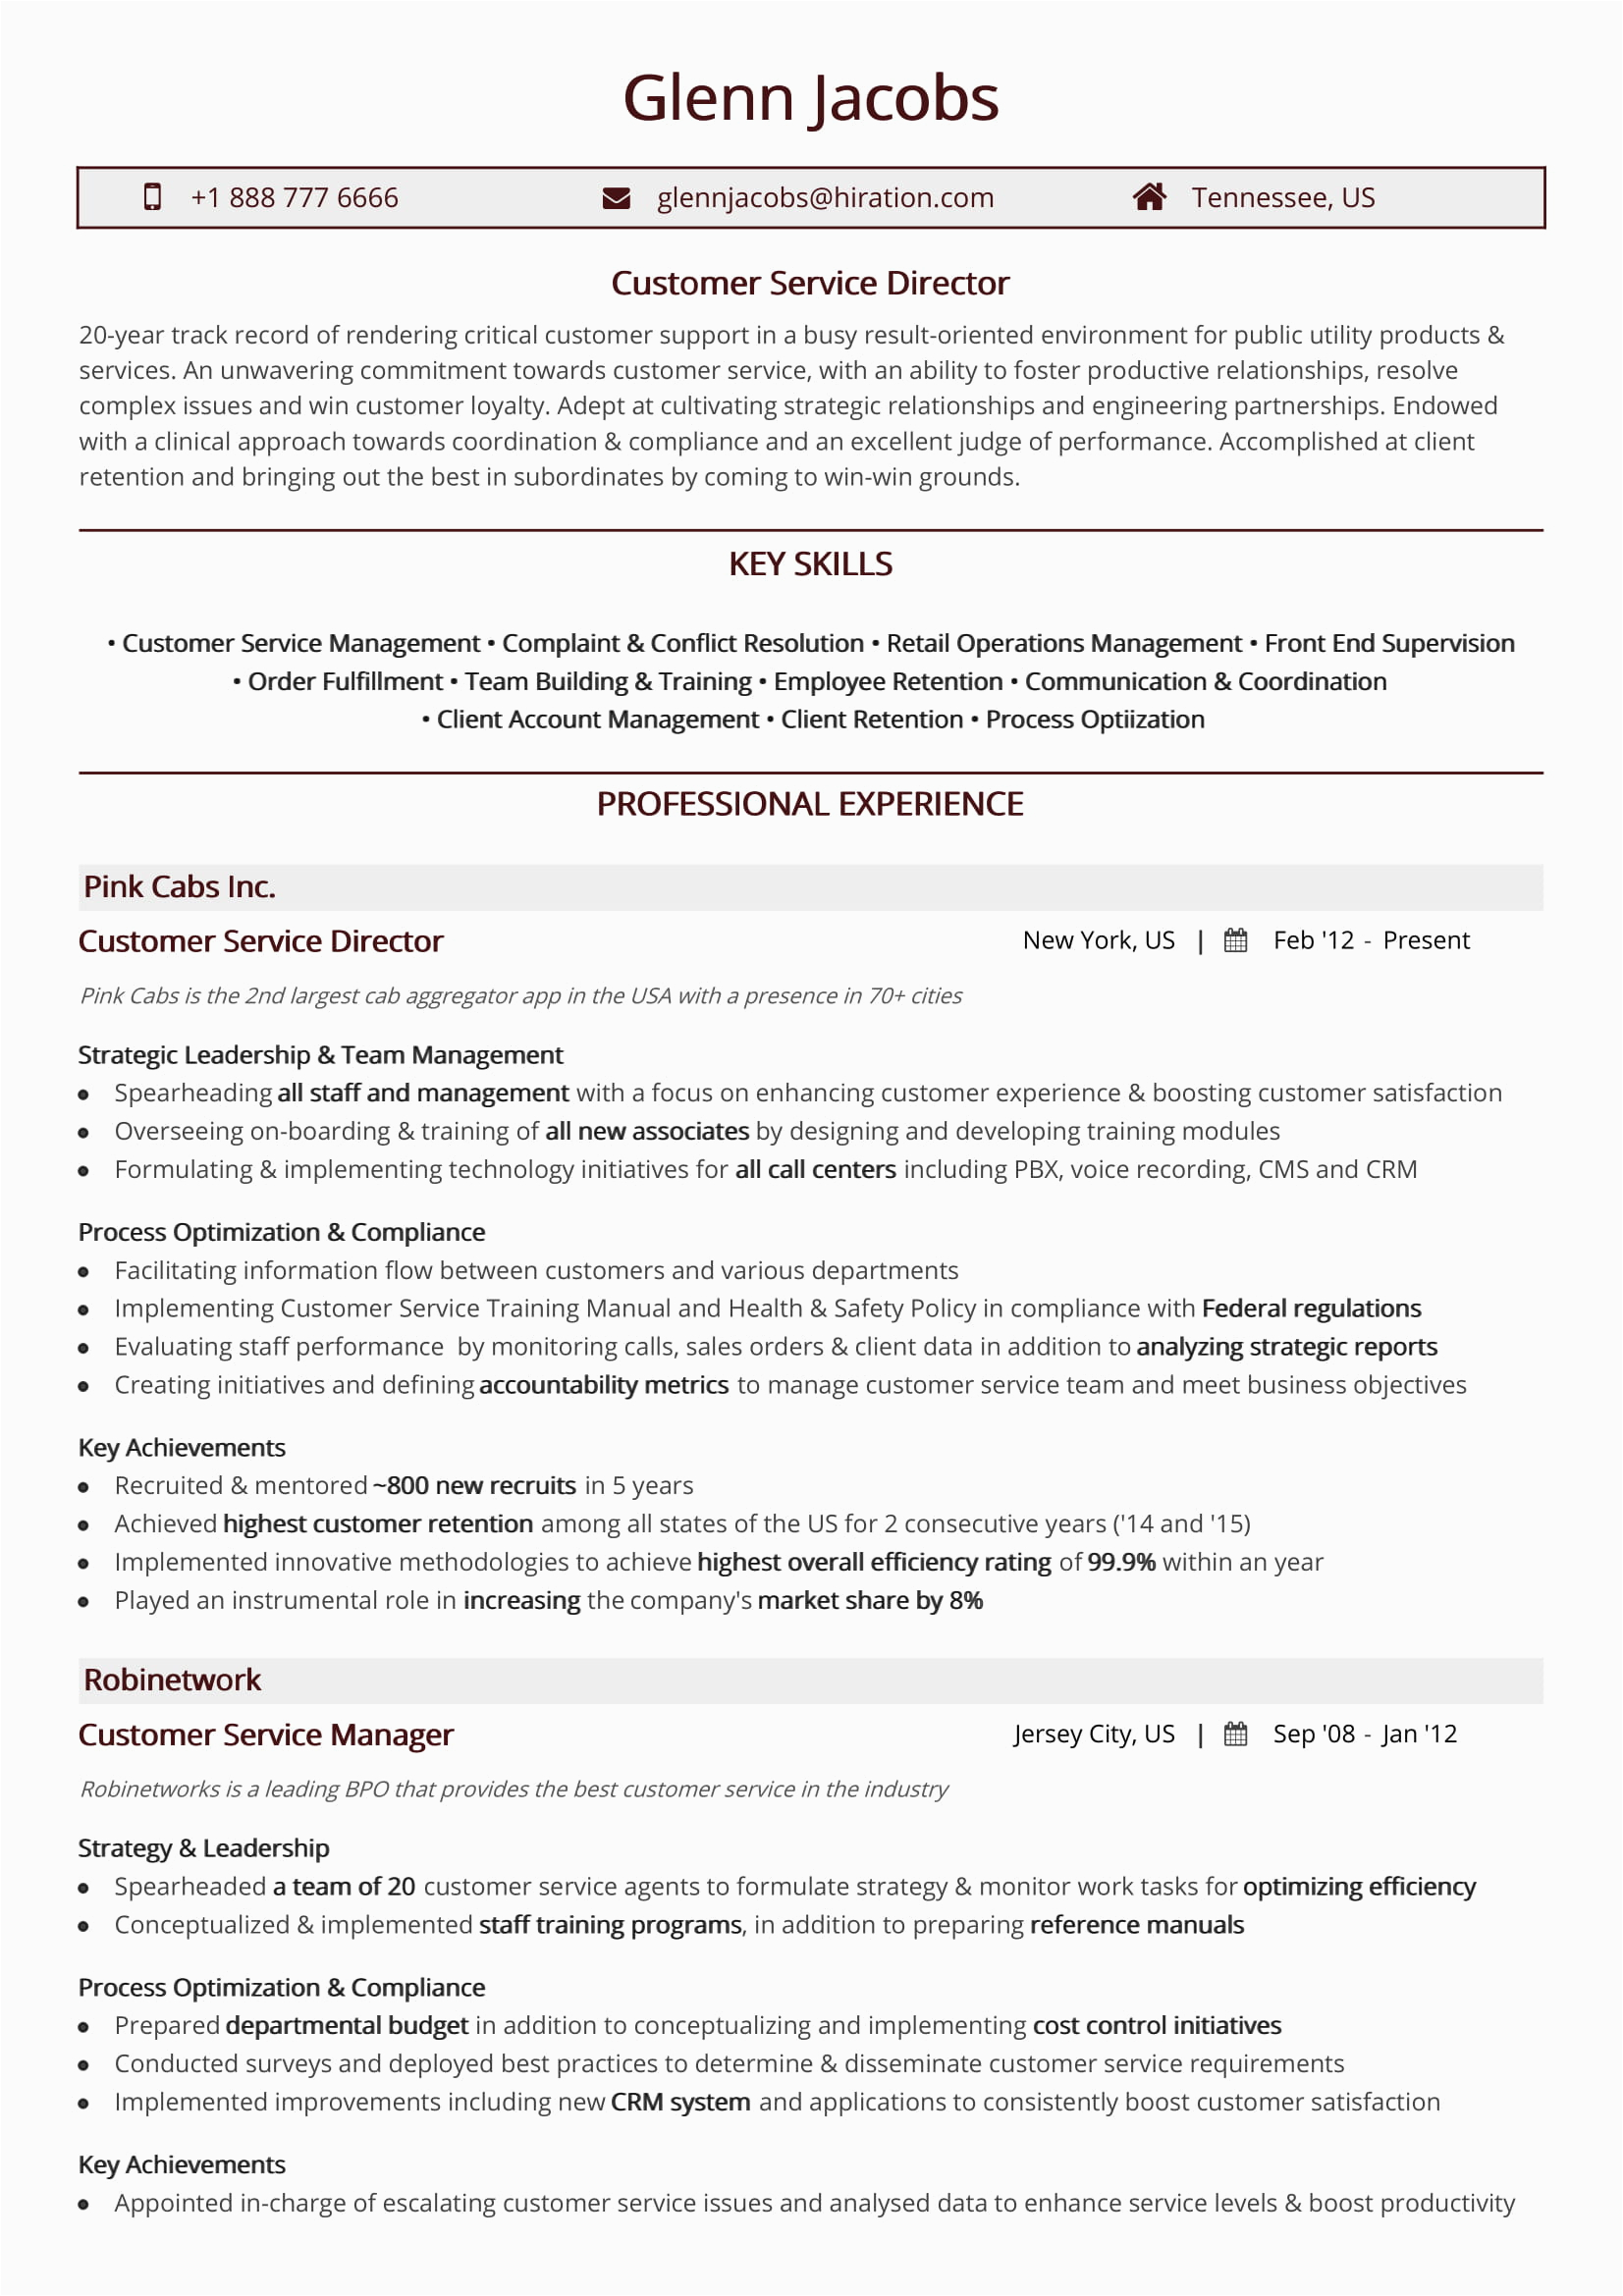 Sample Resume for A Customer Service Customer Service Resume Examples & Resume Samples [2020]